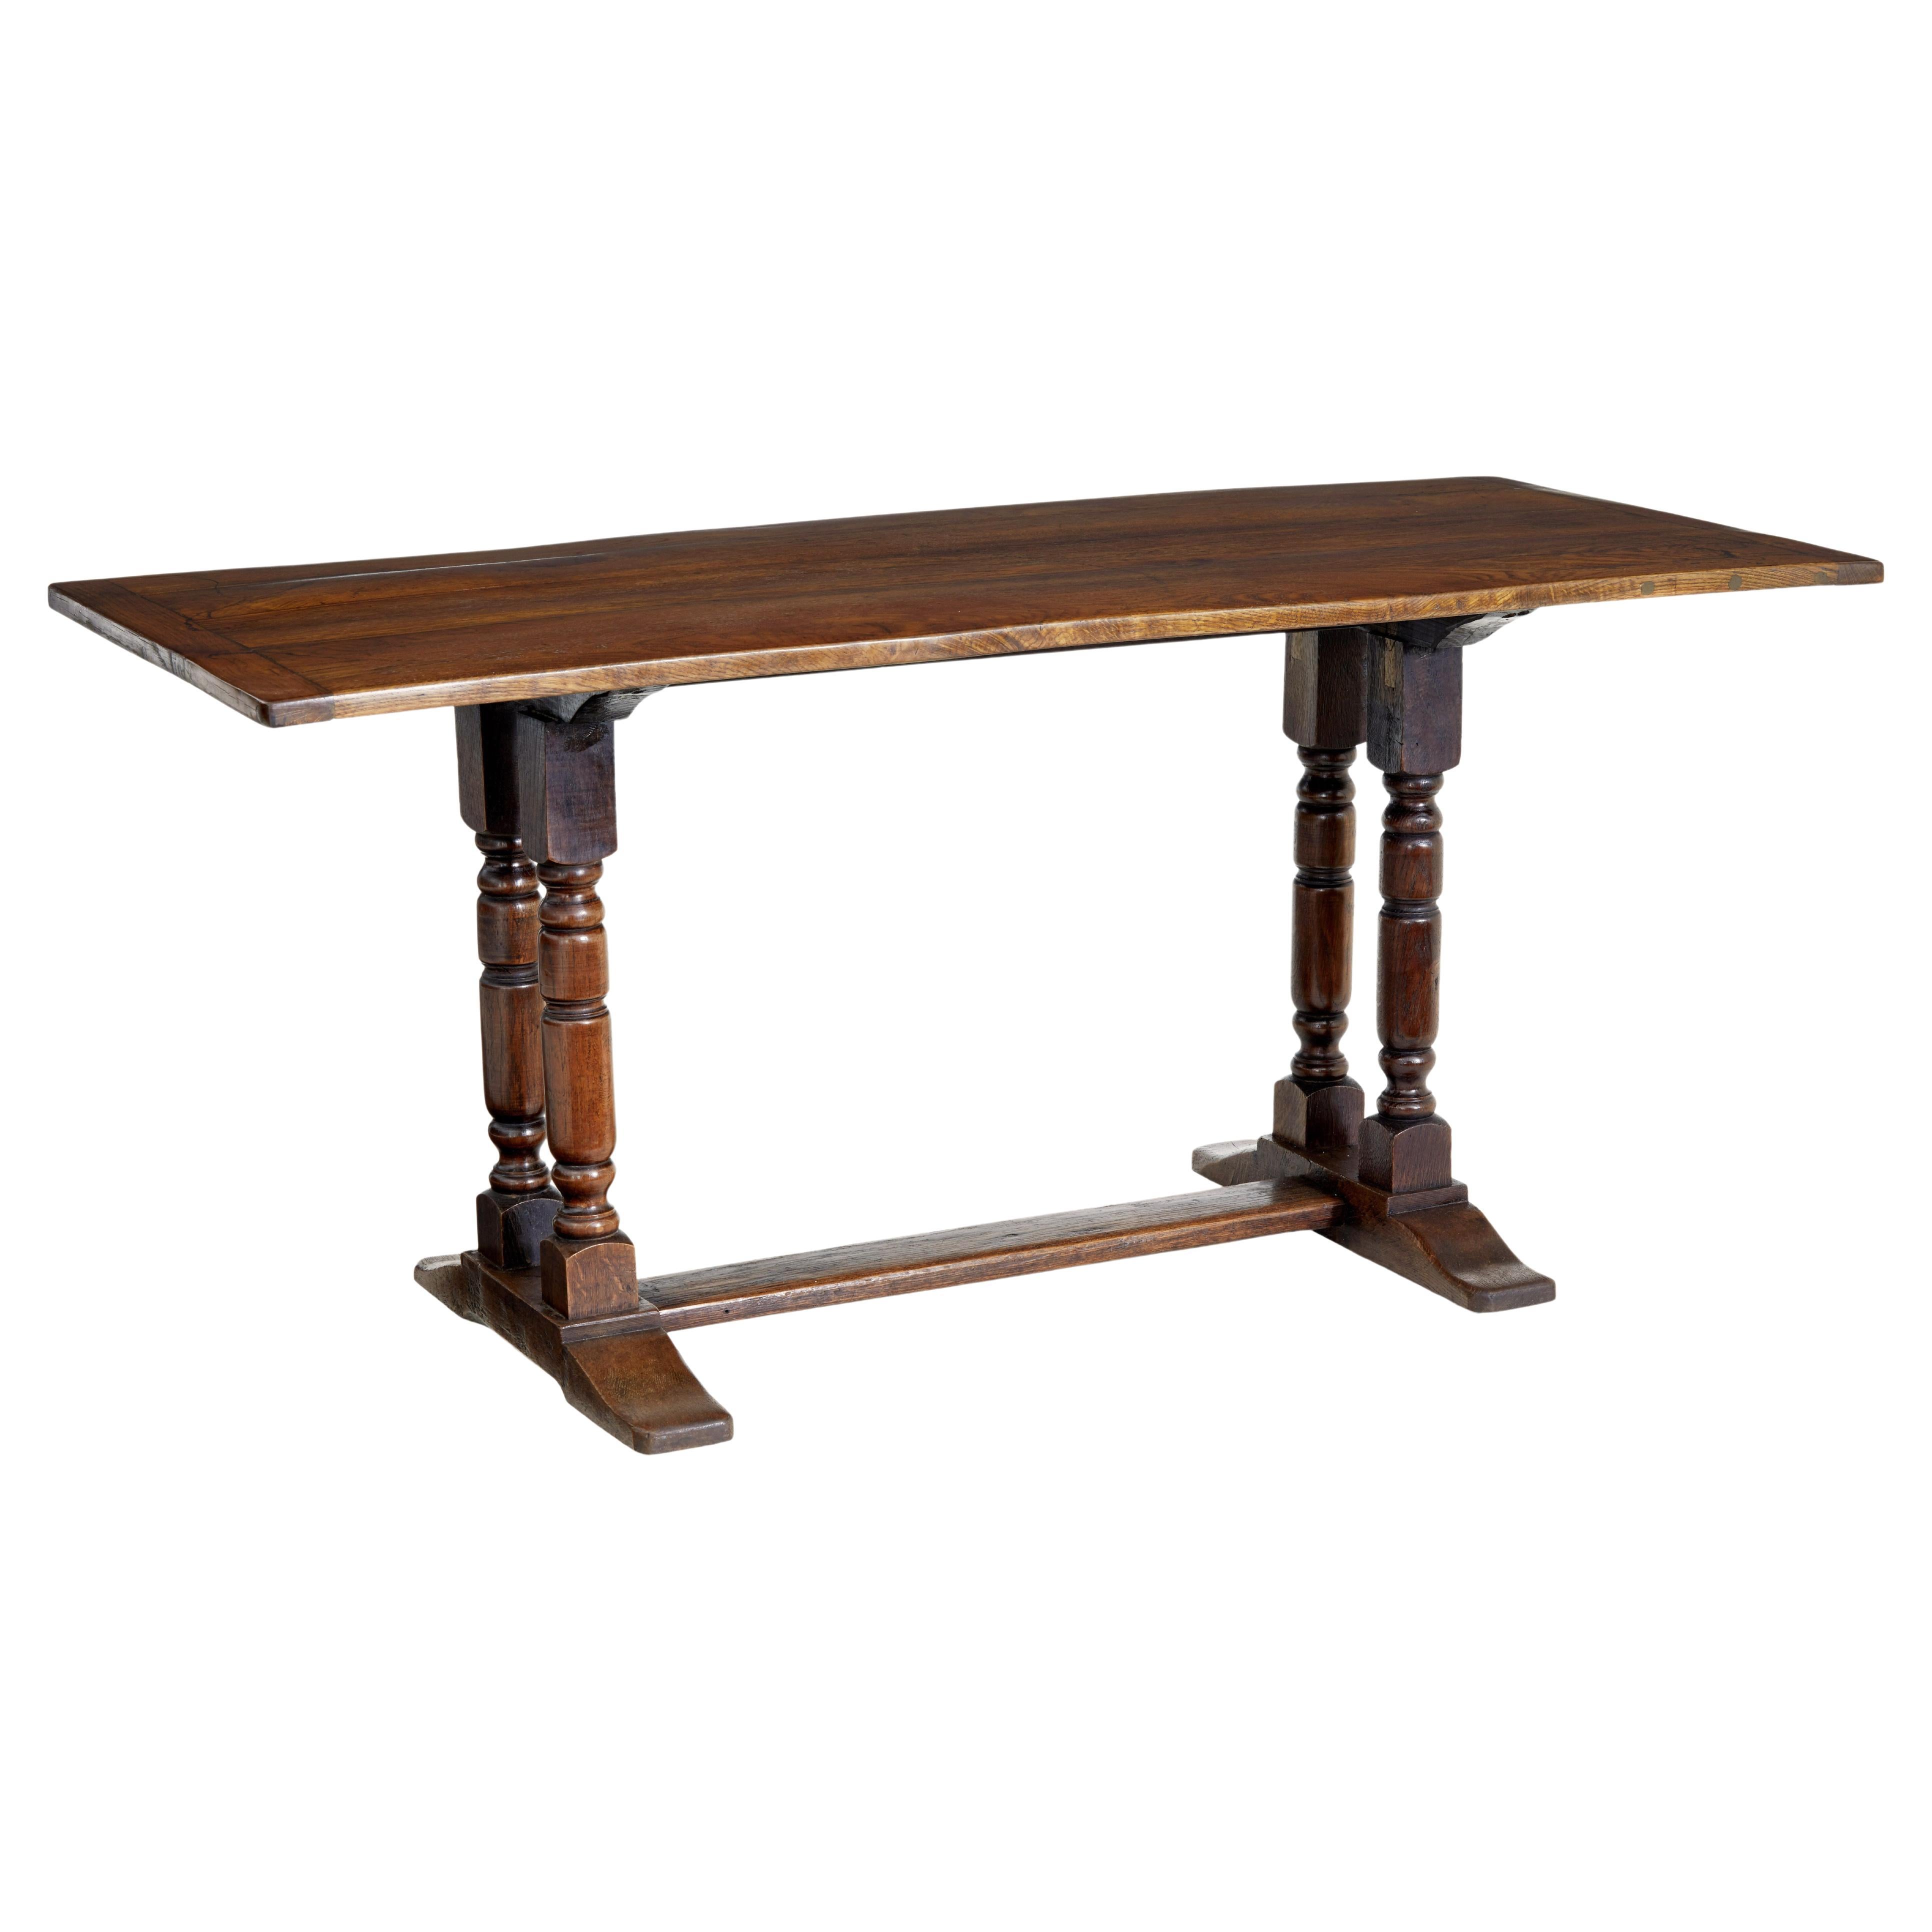 Rustic 19th Century oak dining table